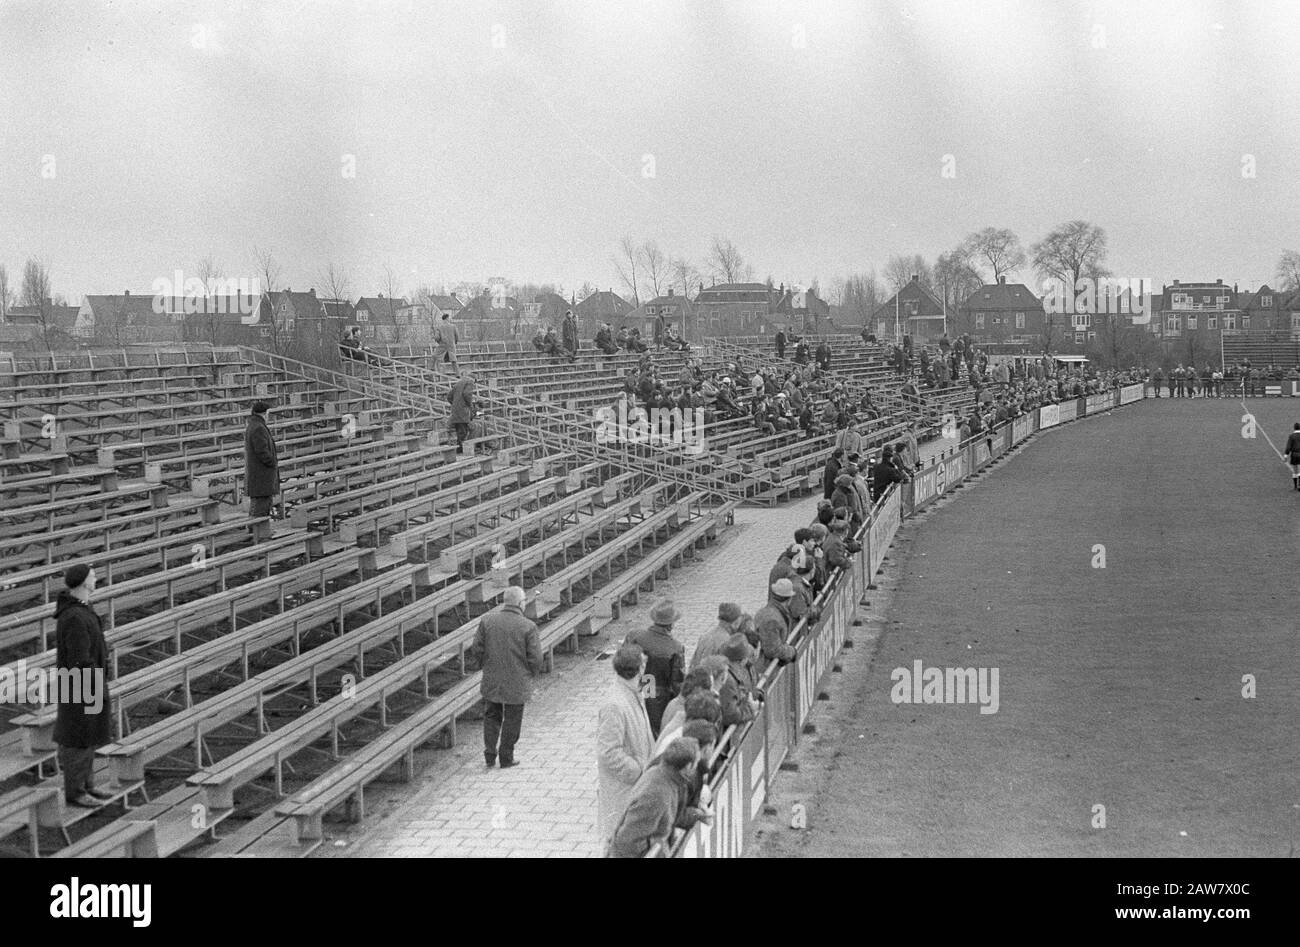 Volewijckers - Alkmaar '54 1-2  Empty grandstand Date: November 27, 1966 Location: Amsterdam Keywords: sports, bleachers, soccer Institution Name: Volewijckers Stock Photo